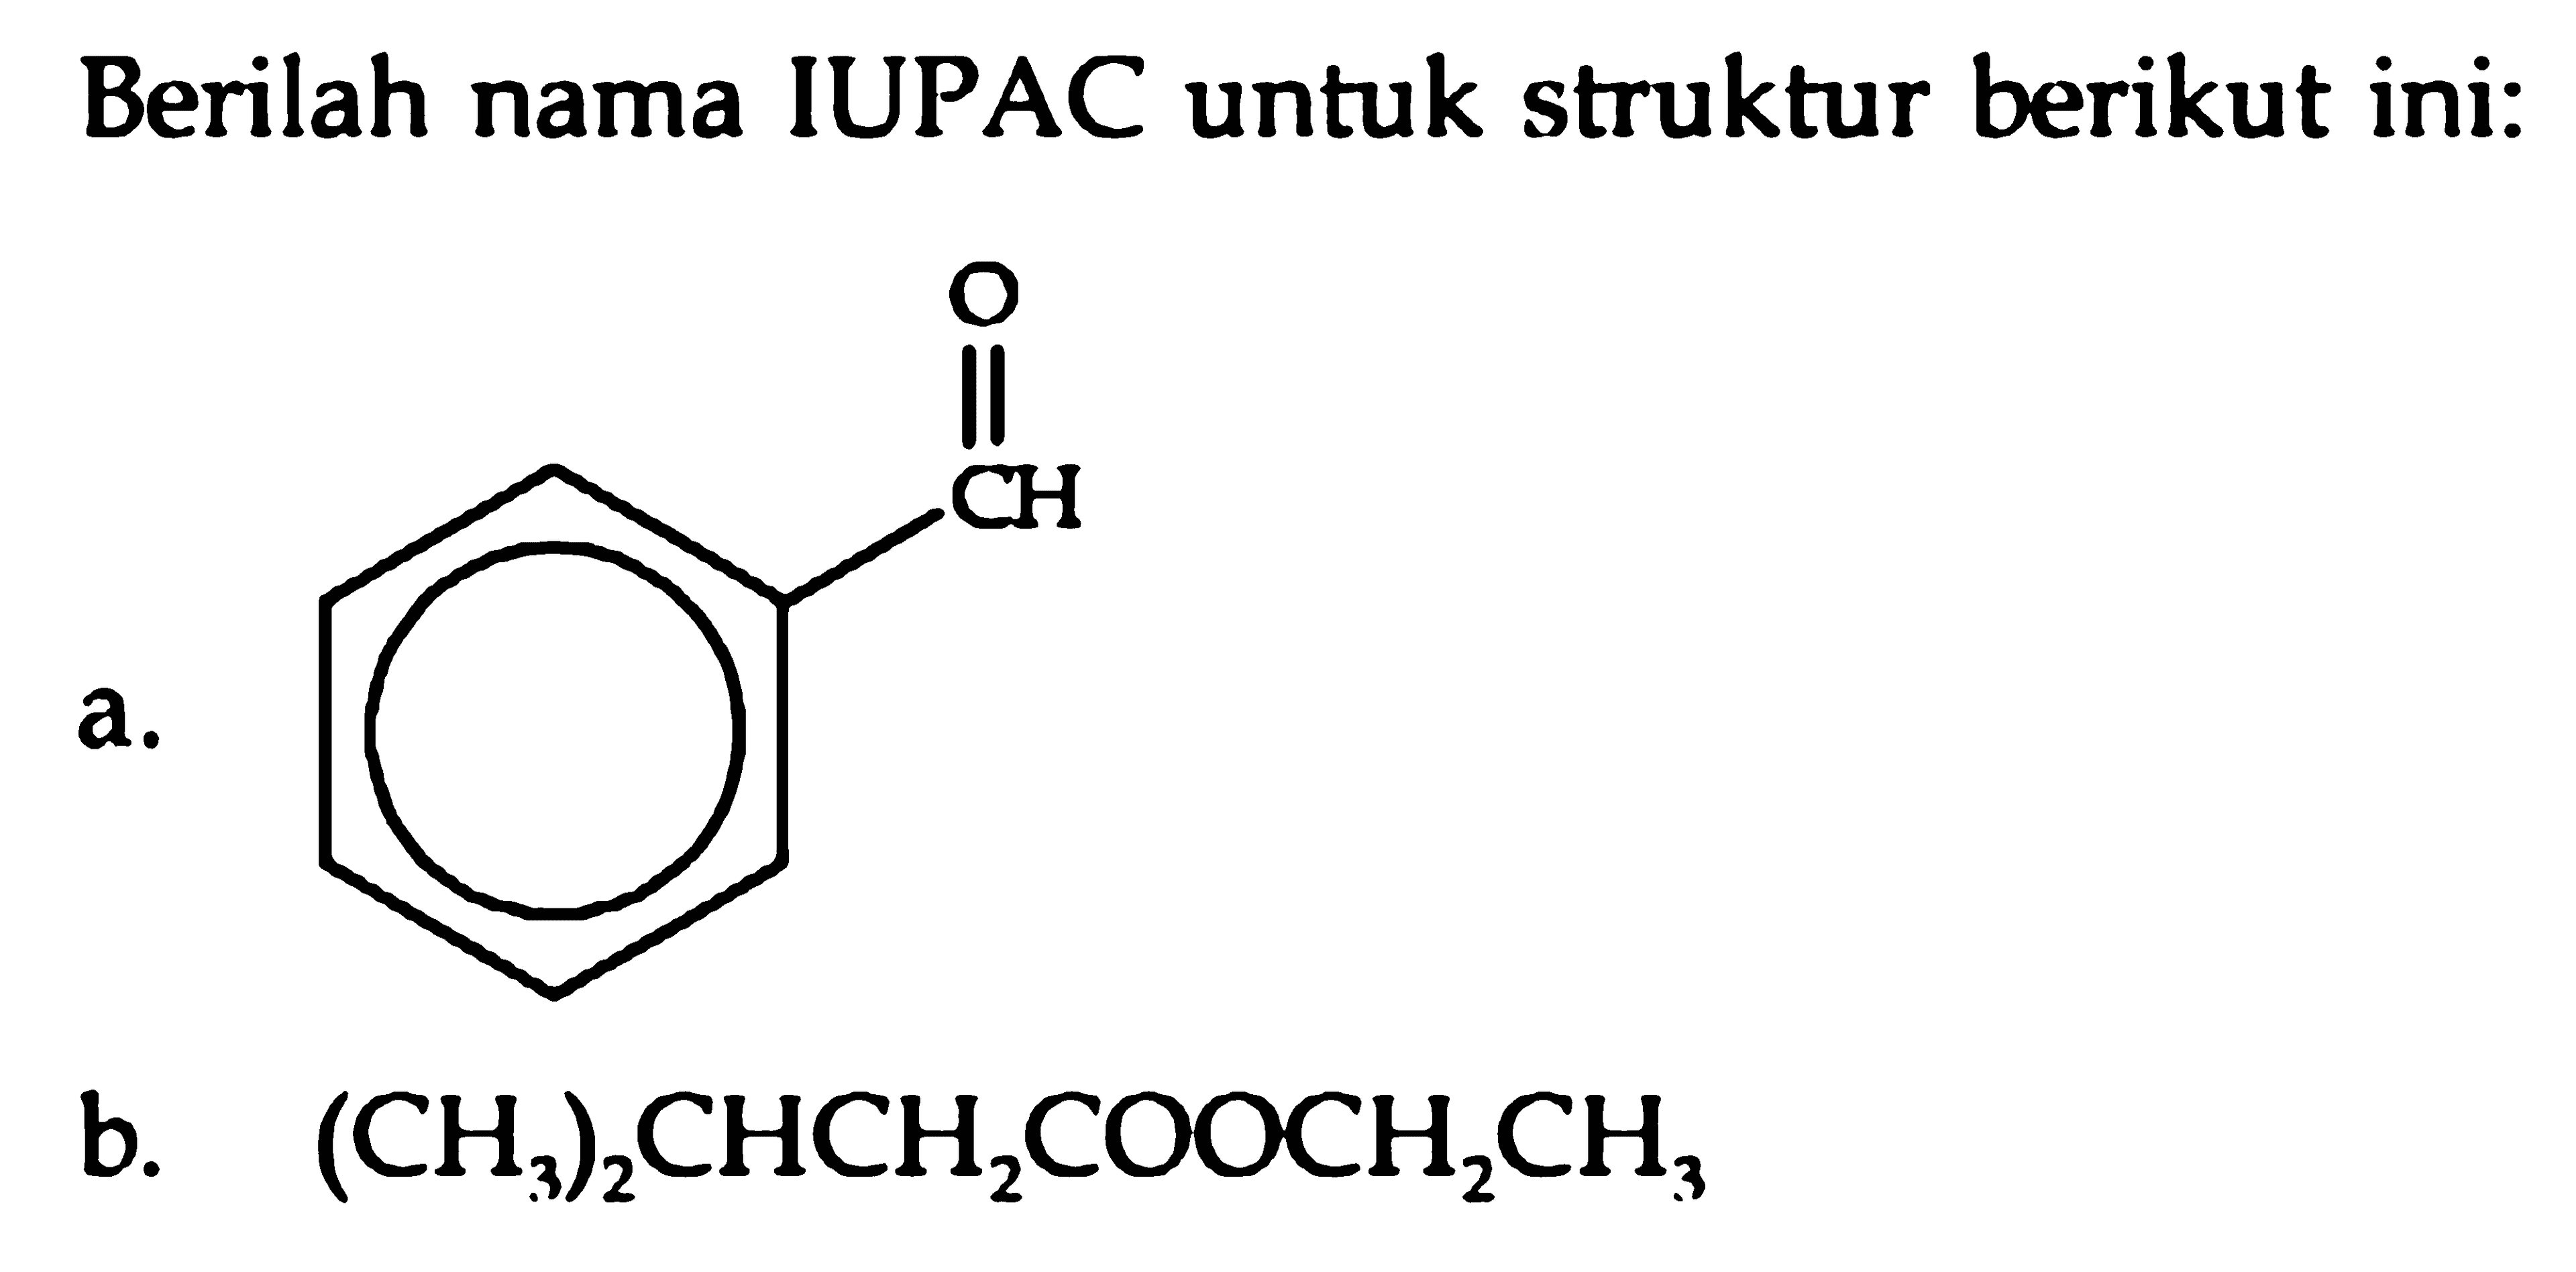 Berilah nama IUPAC untuk struktur berikut ini: a. CH=O b. (CH3)2CHCH2COOCH2CH3 